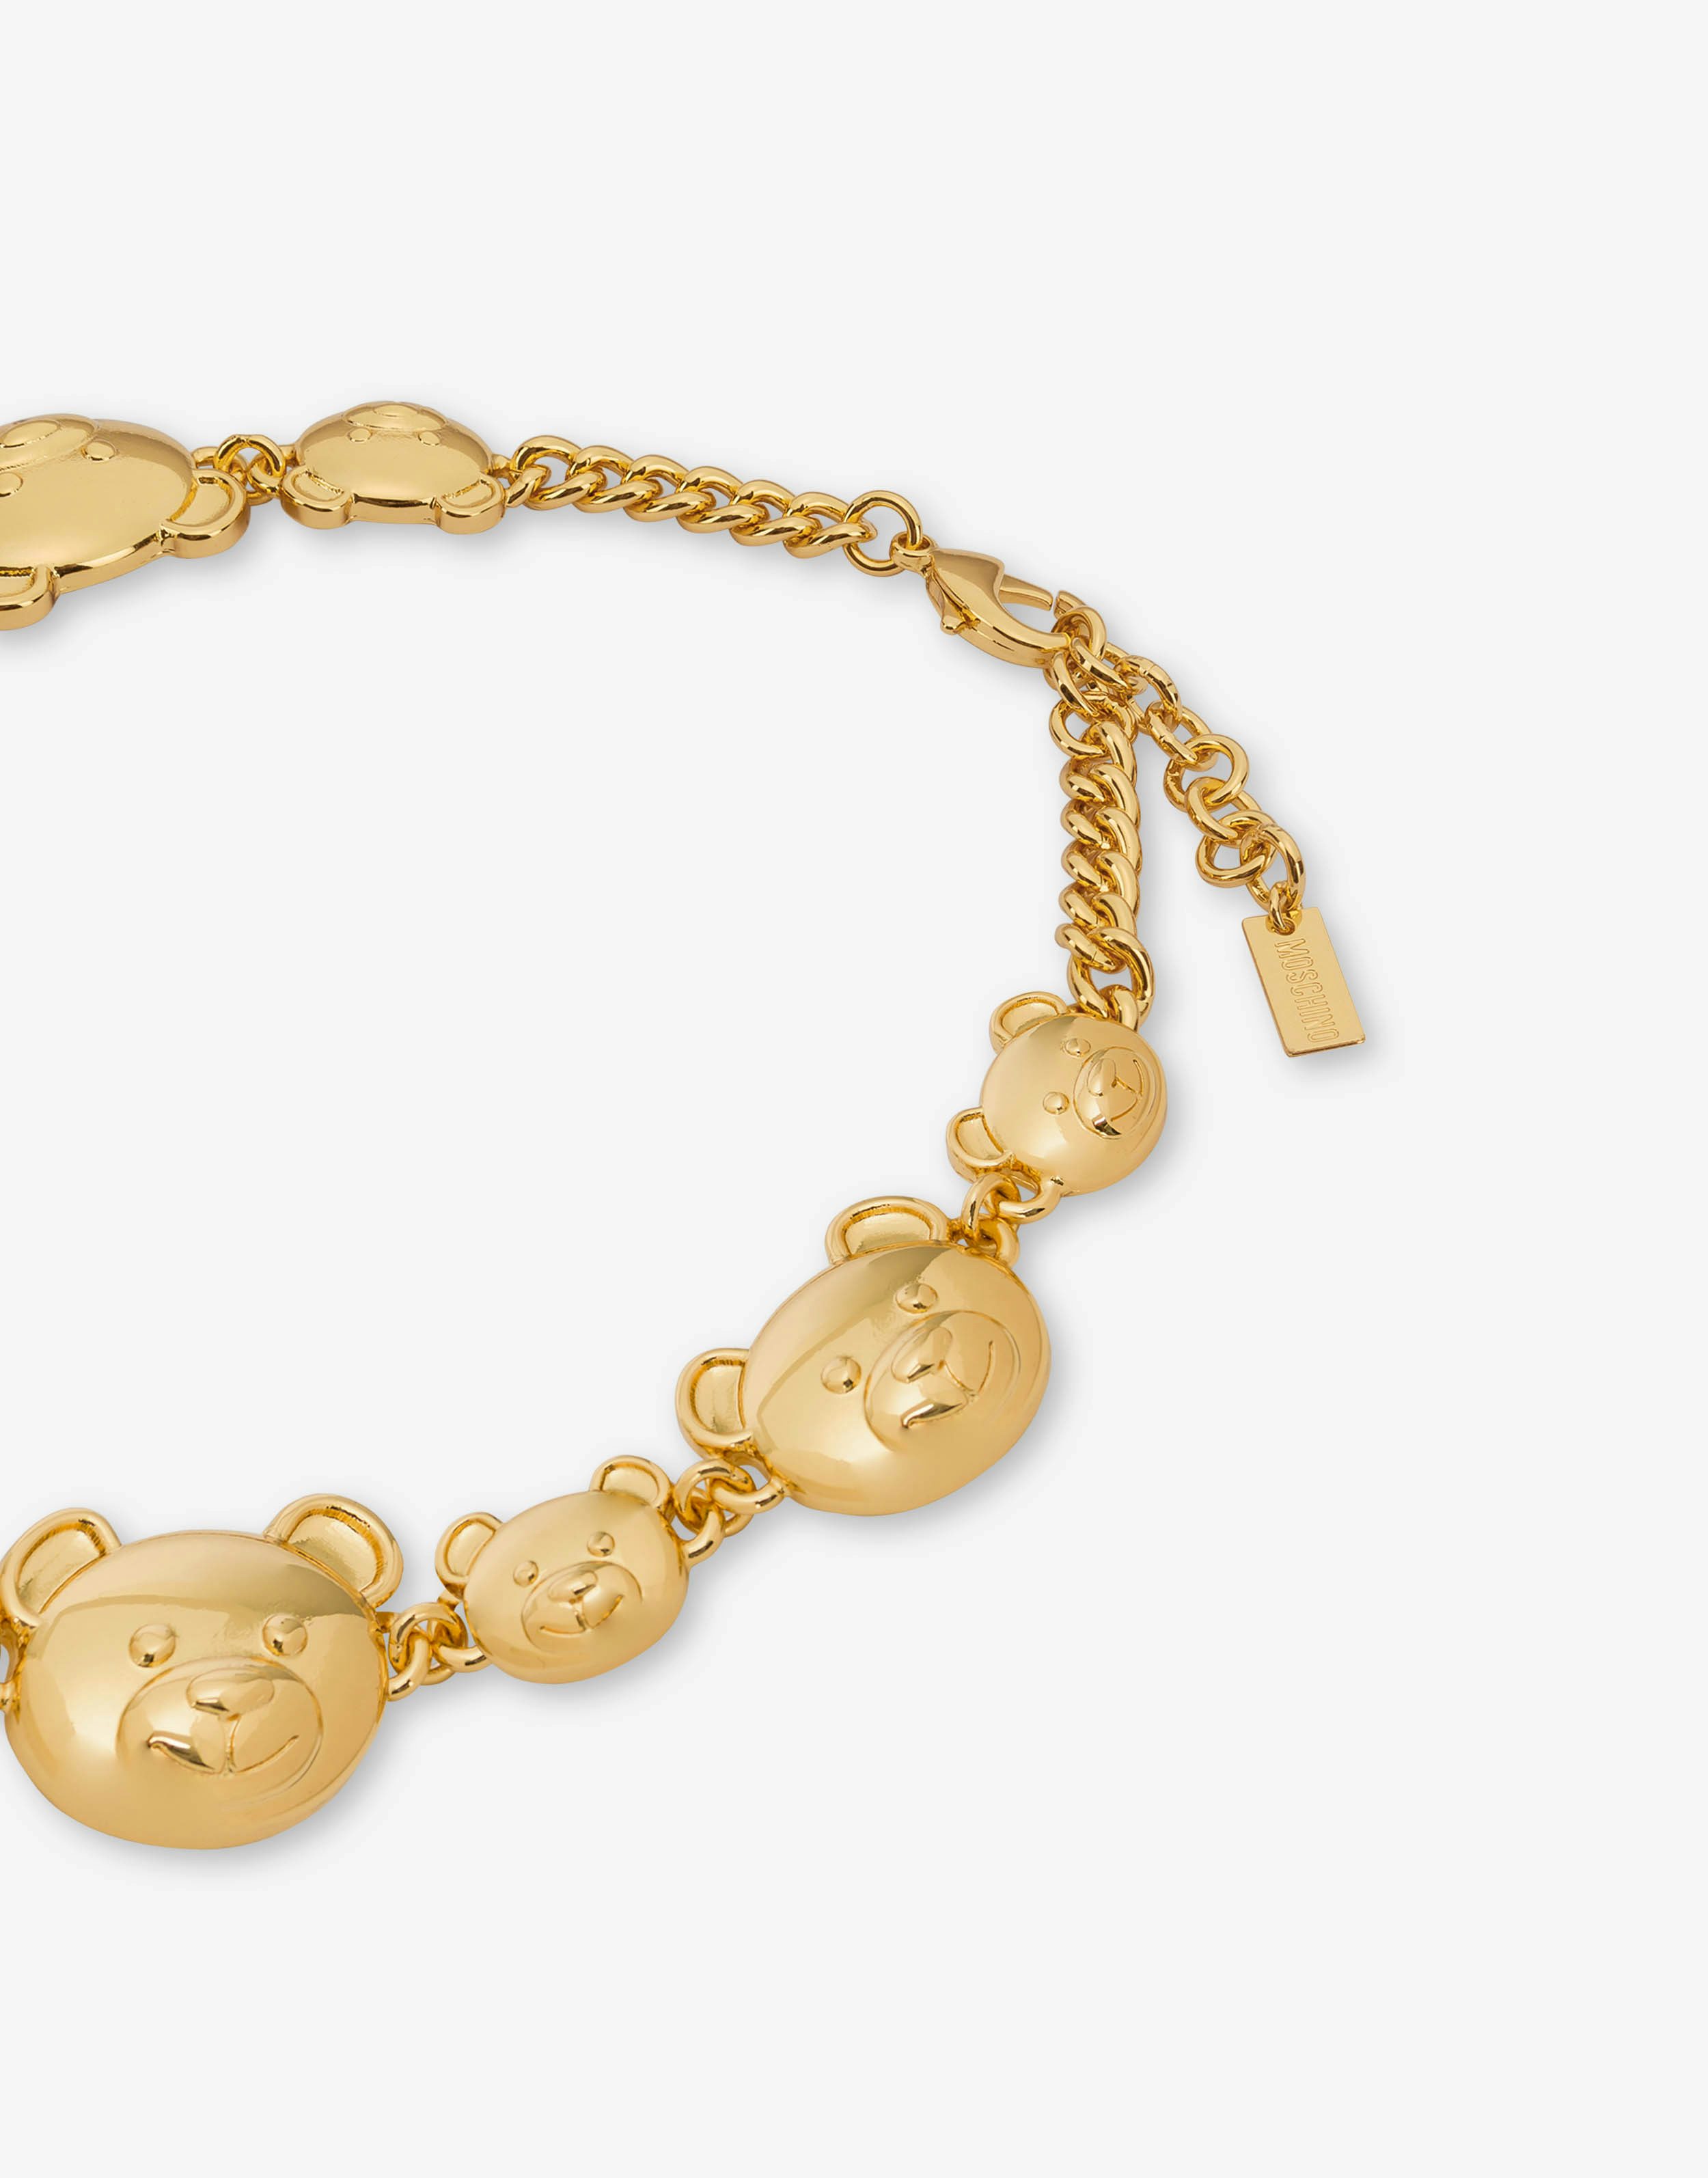 Moschino Teddy Bear choker necklace. 1